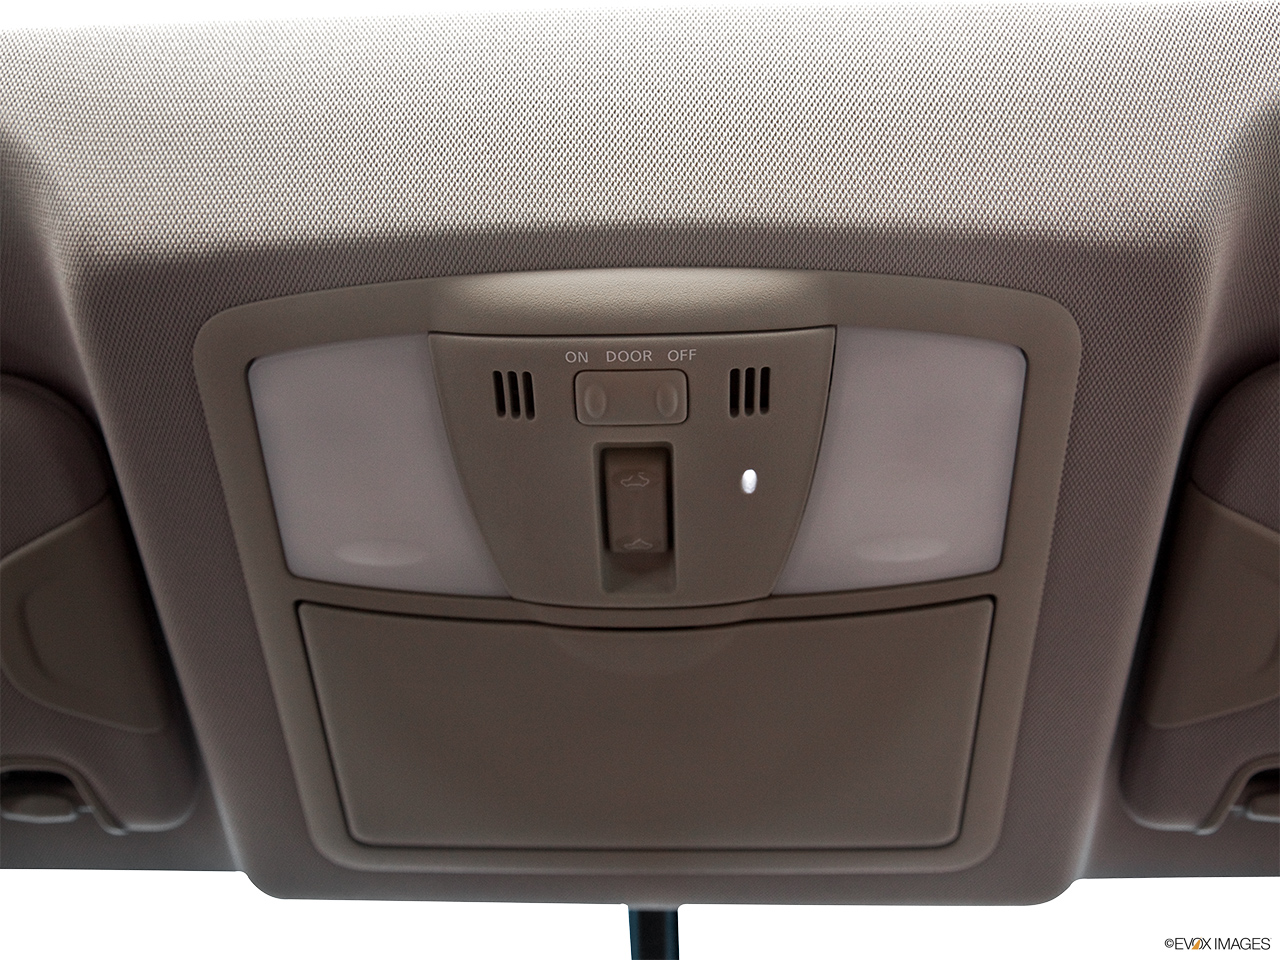 2011 Infiniti EX EX35 Journey Courtesy lamps/ceiling controls. 